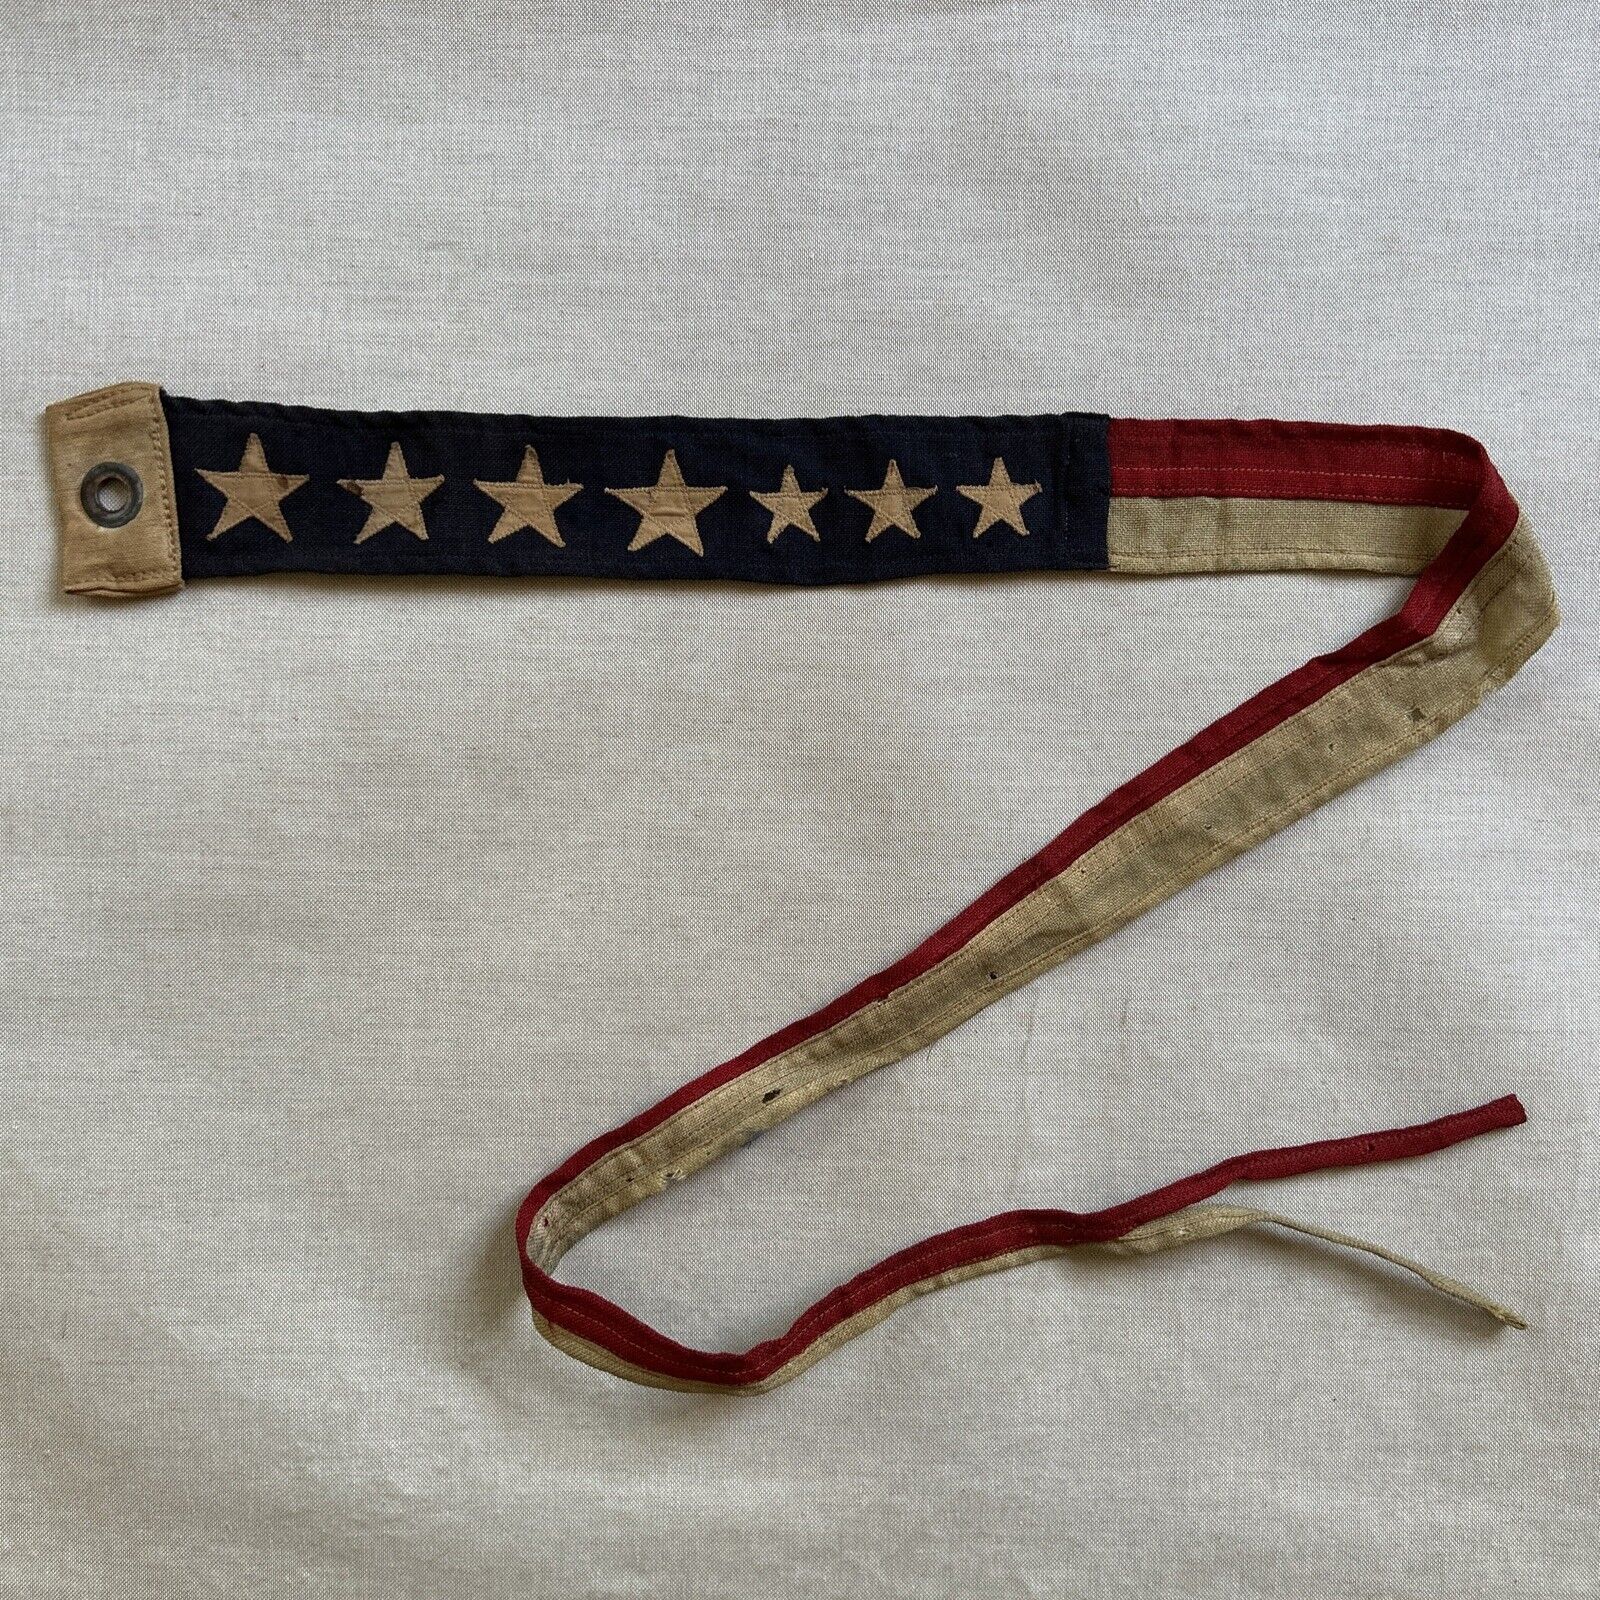 U.S. NAVY “7 Stars” COMMISSIONING PENNANT WWI-WWII ERA (1917-1945) Flag American